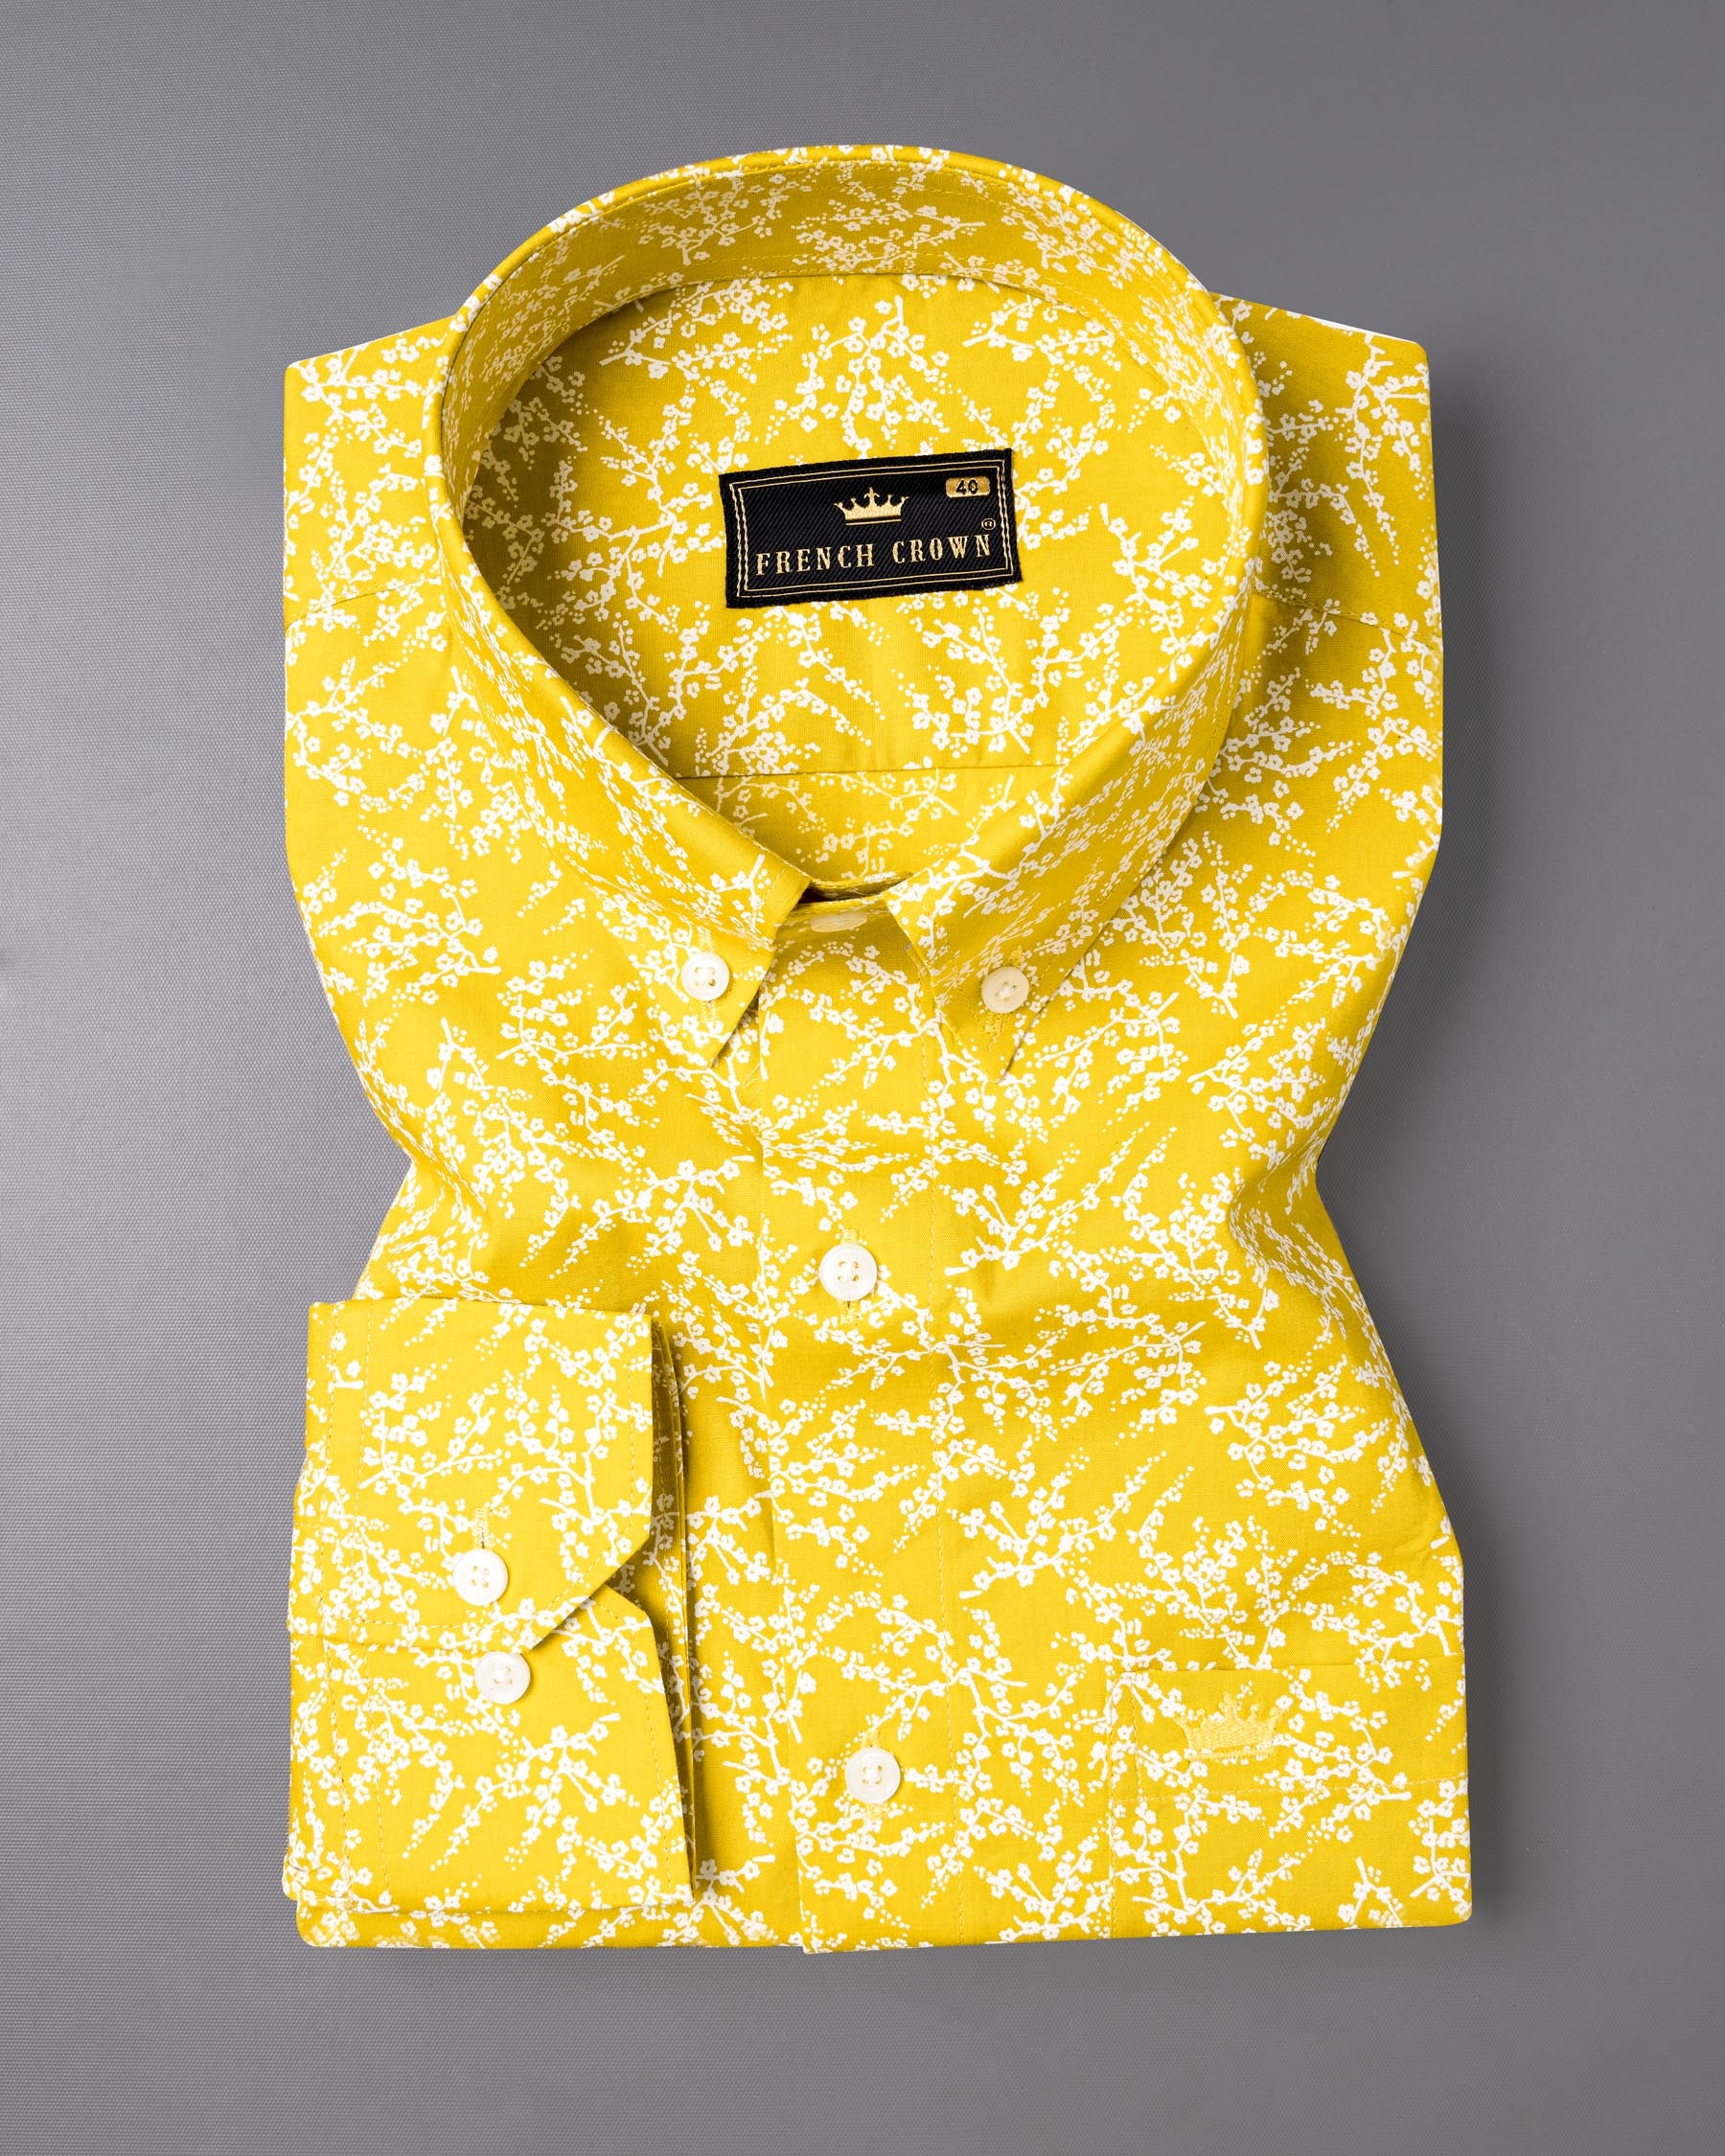 School Bus Yellow and White Flower Vine Printed Super Soft Premium Cotton Shirt